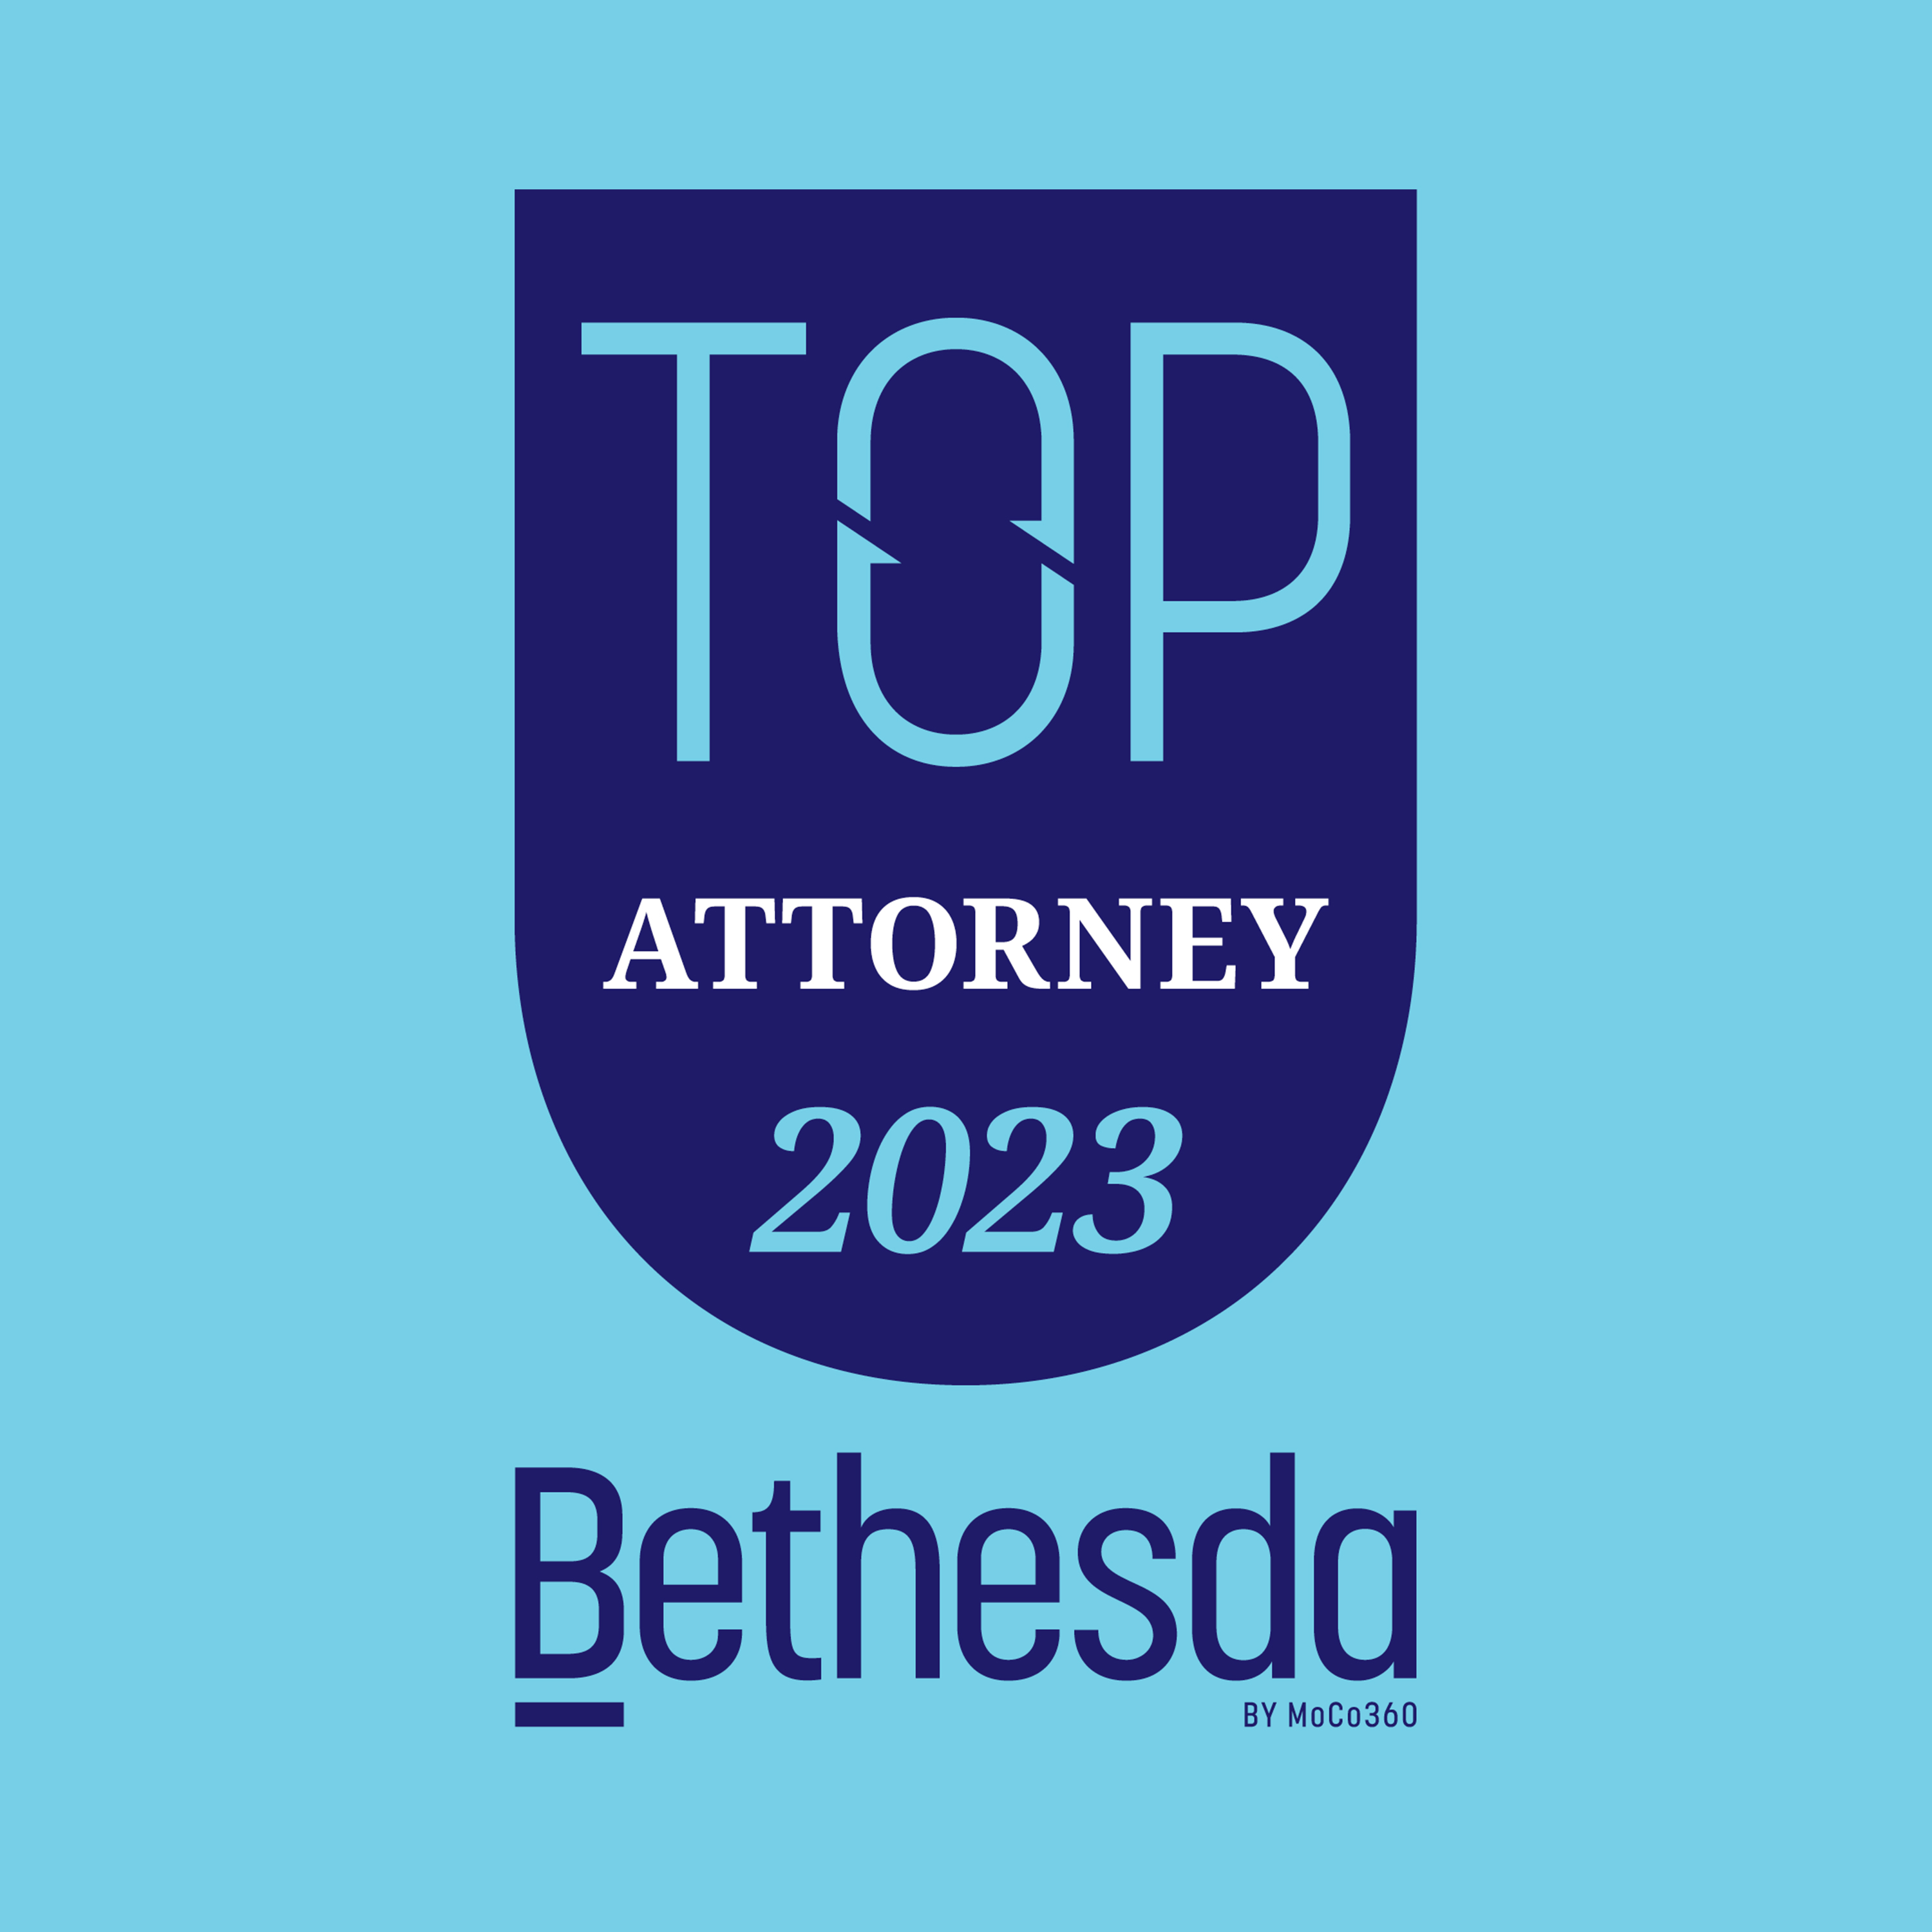 2023 Top Attorney, Bethesda lawyer